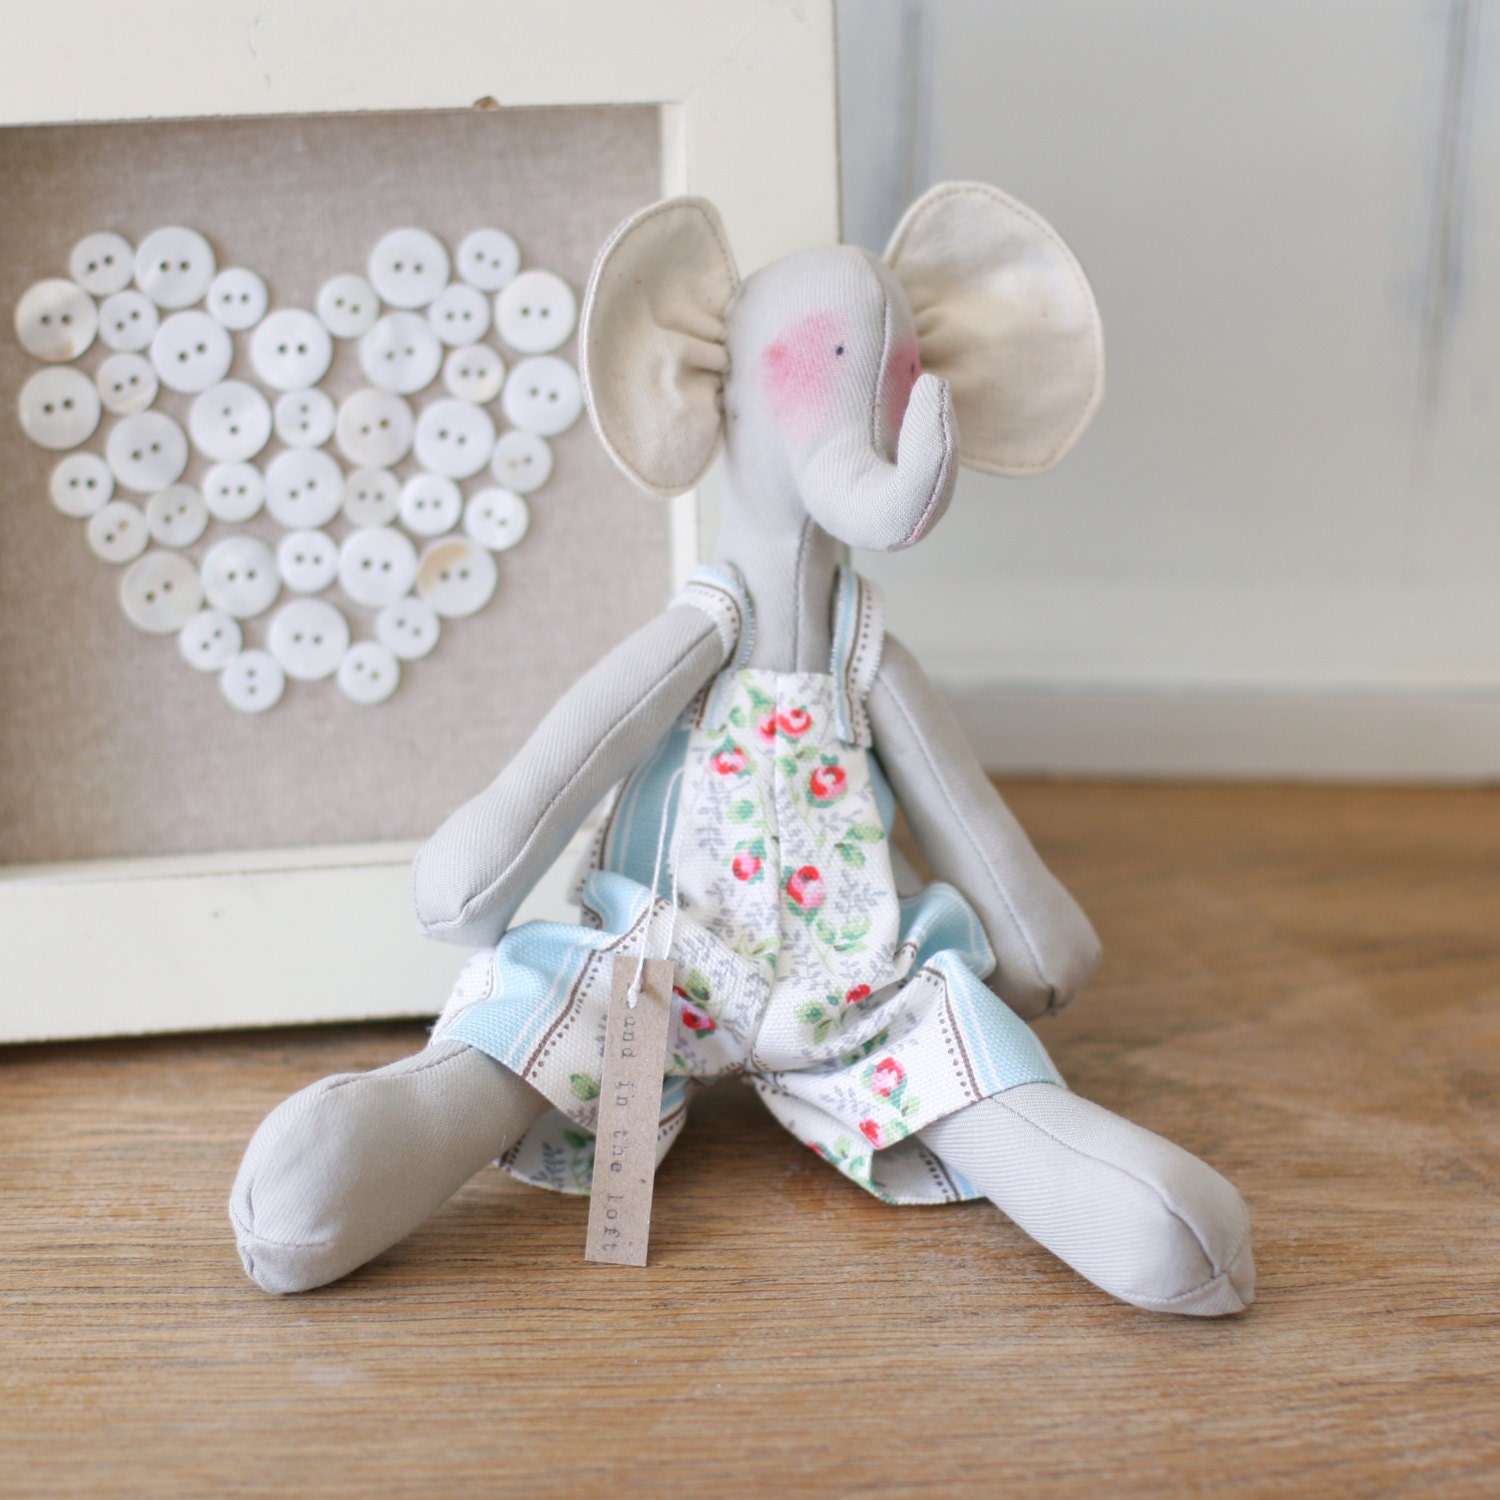 Handmade Vintage Inspired Shabby Chic Cath Kidston Soft Stuffed Elephant Doll Toy for Little Children for Girl Boy Birthday Gift Baby Shower